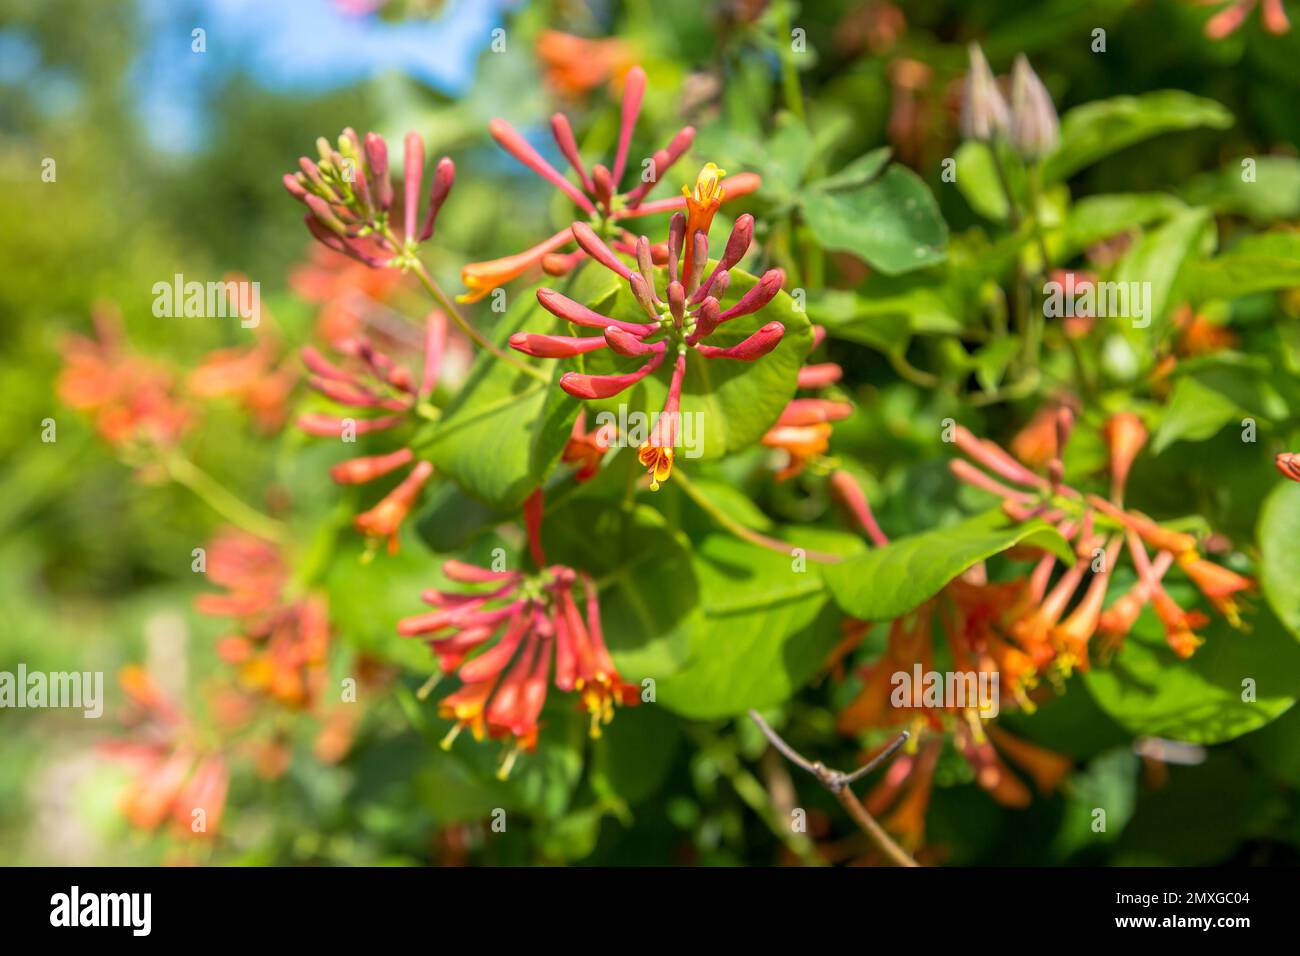 Lonicera sempervirens flowers, common names coral honeysuckle, trumpet honeysuckle, or scarlet honeysuckle, in bloom. Stock Photo